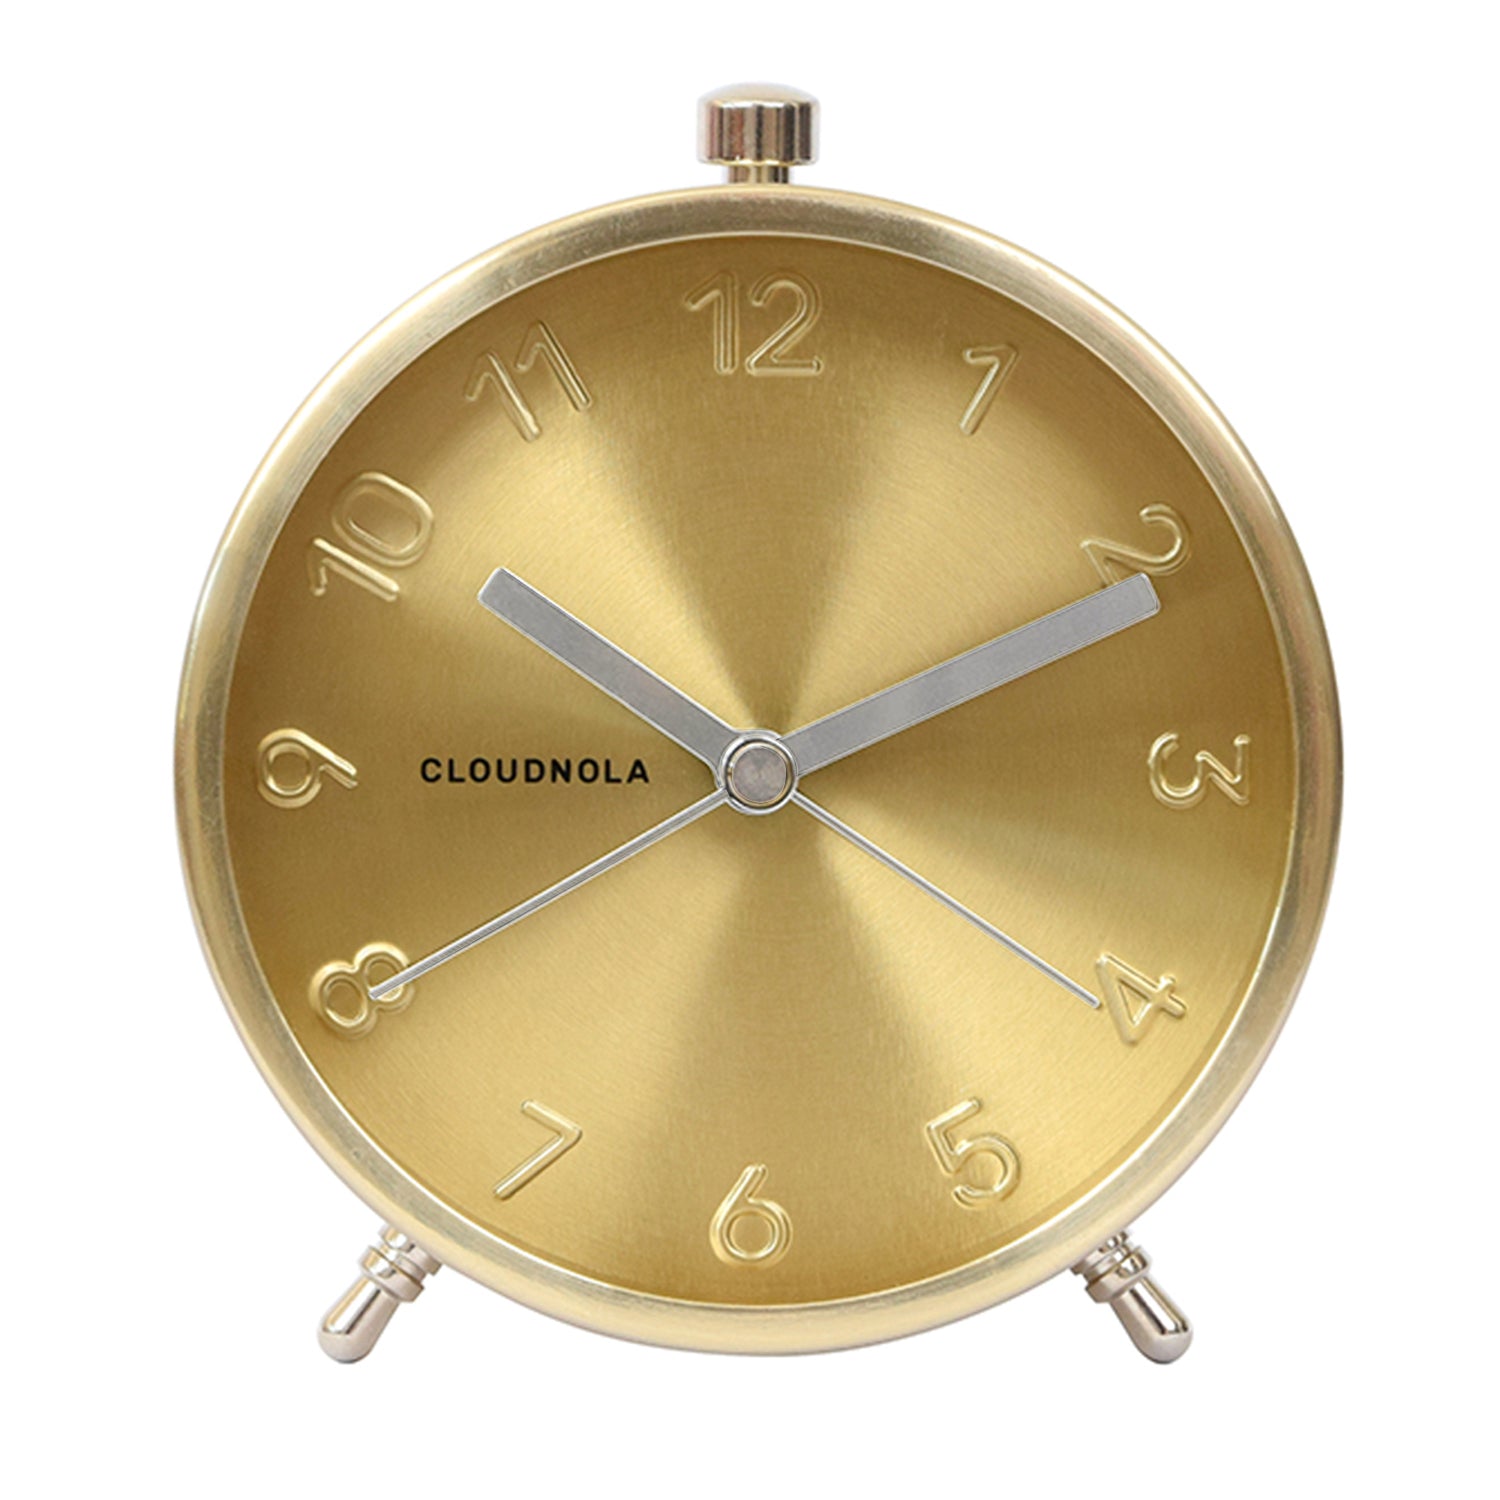 Cloudnola Glam Gold Alarm Clock